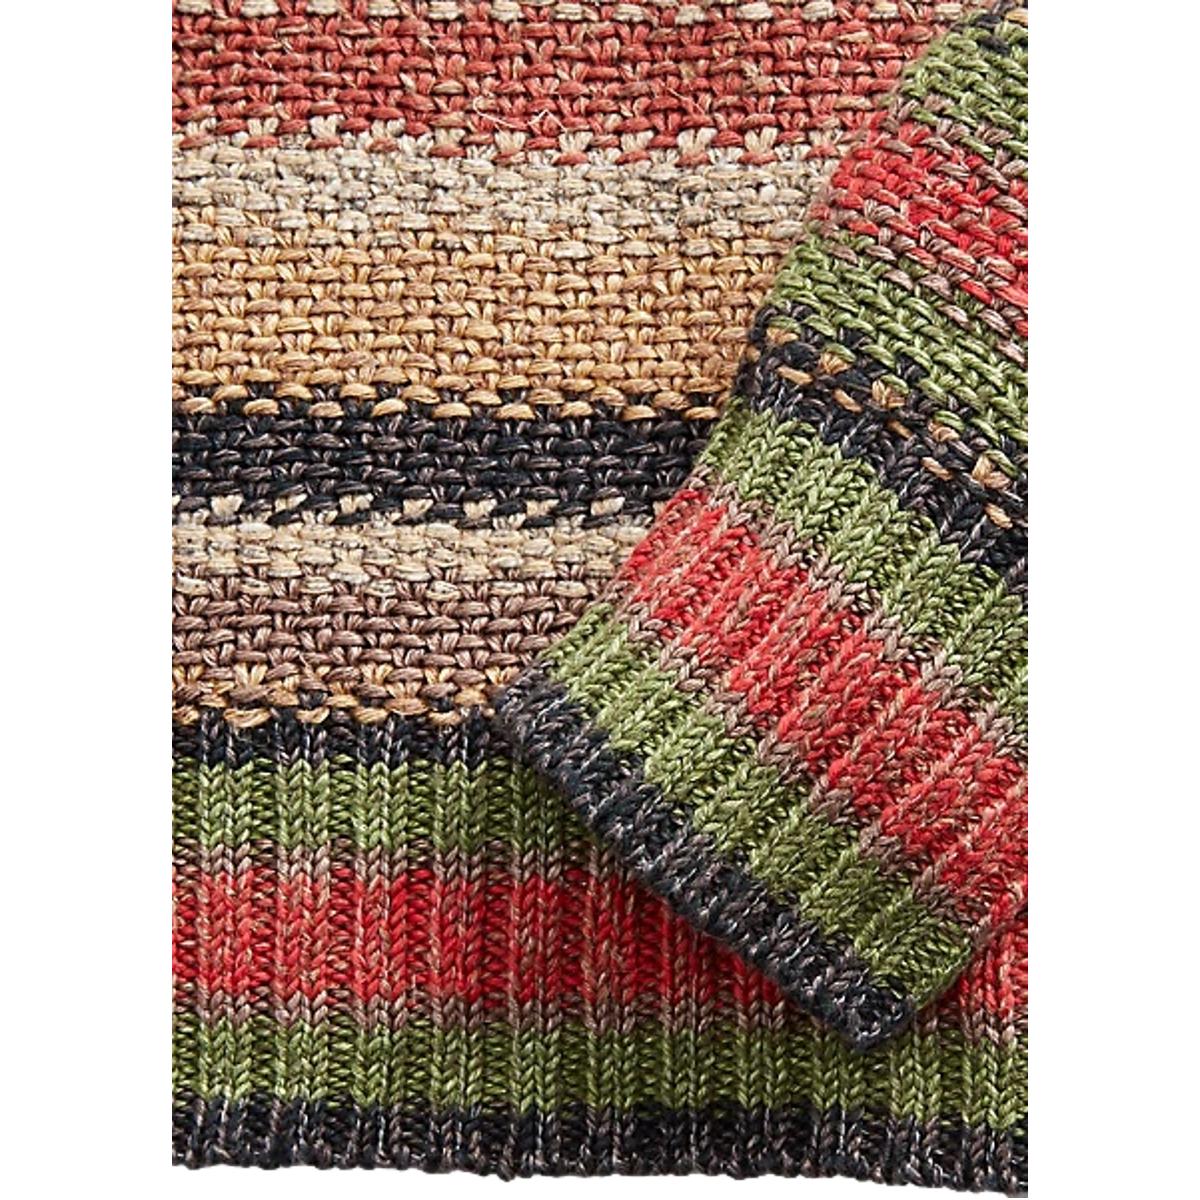 Striped Linen-Blend Sweater Brown Multi Stripe - Sweater